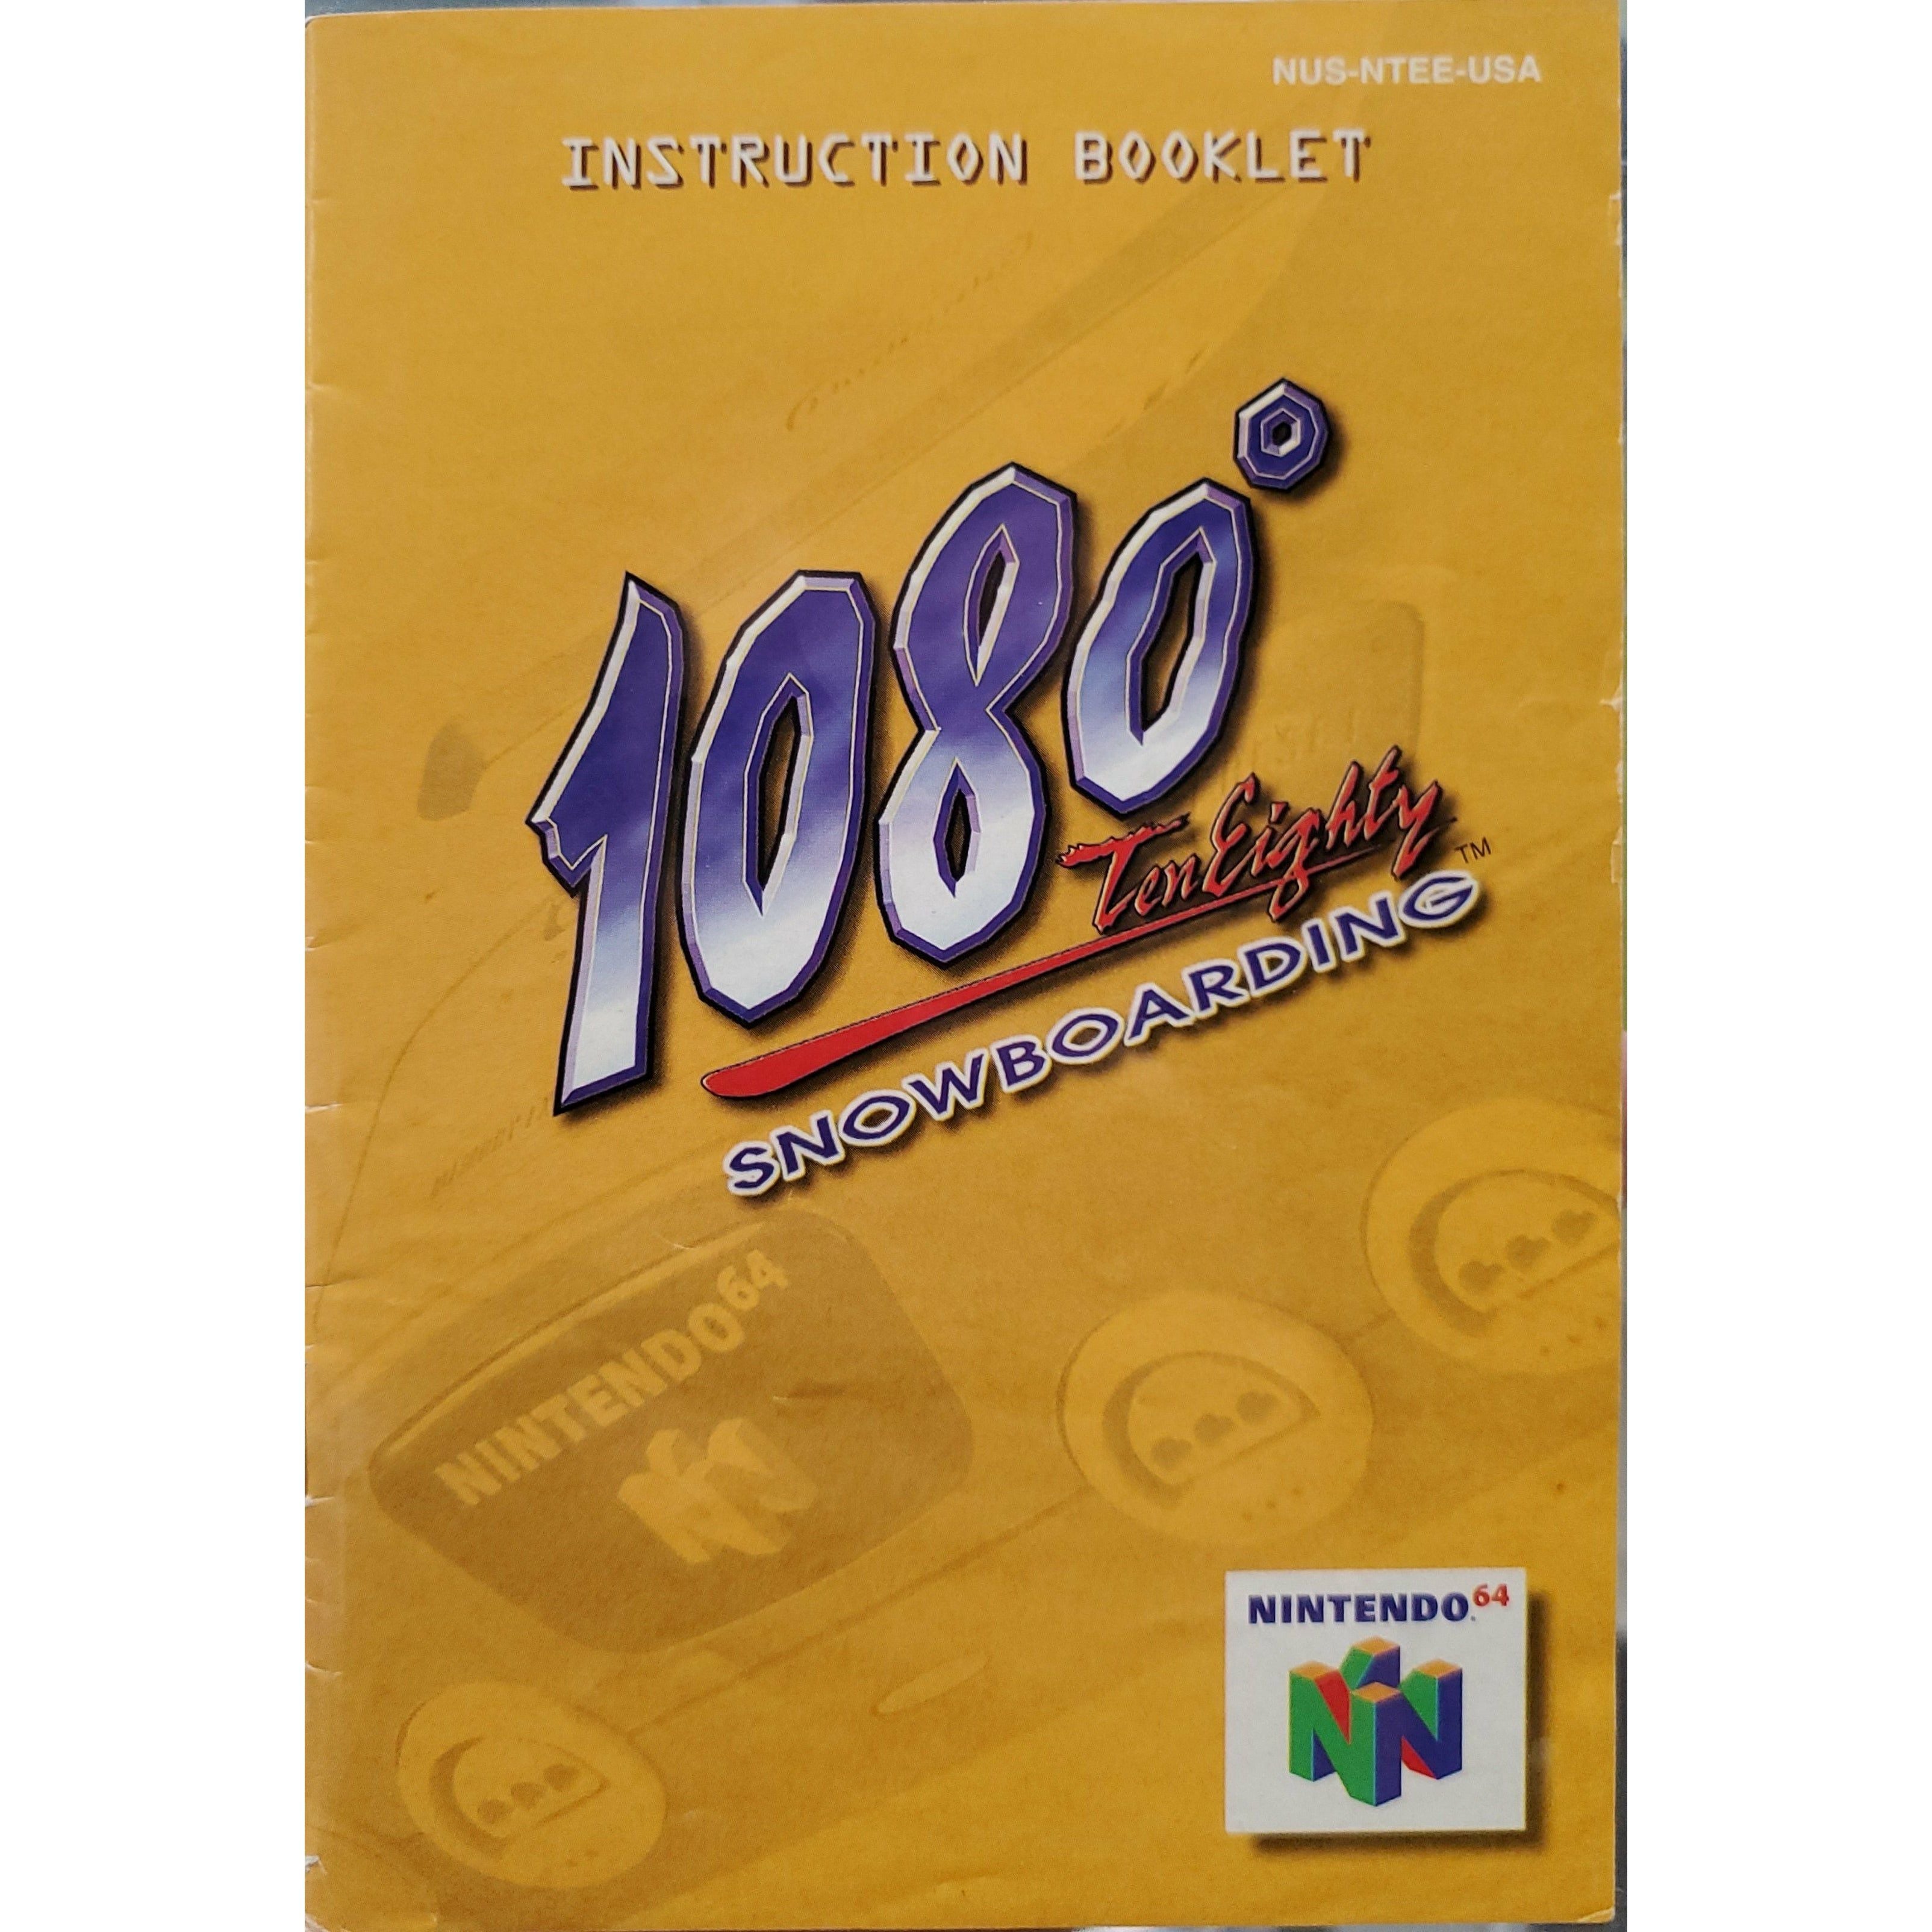 N64 - 1080 Snowboarding (Manual)